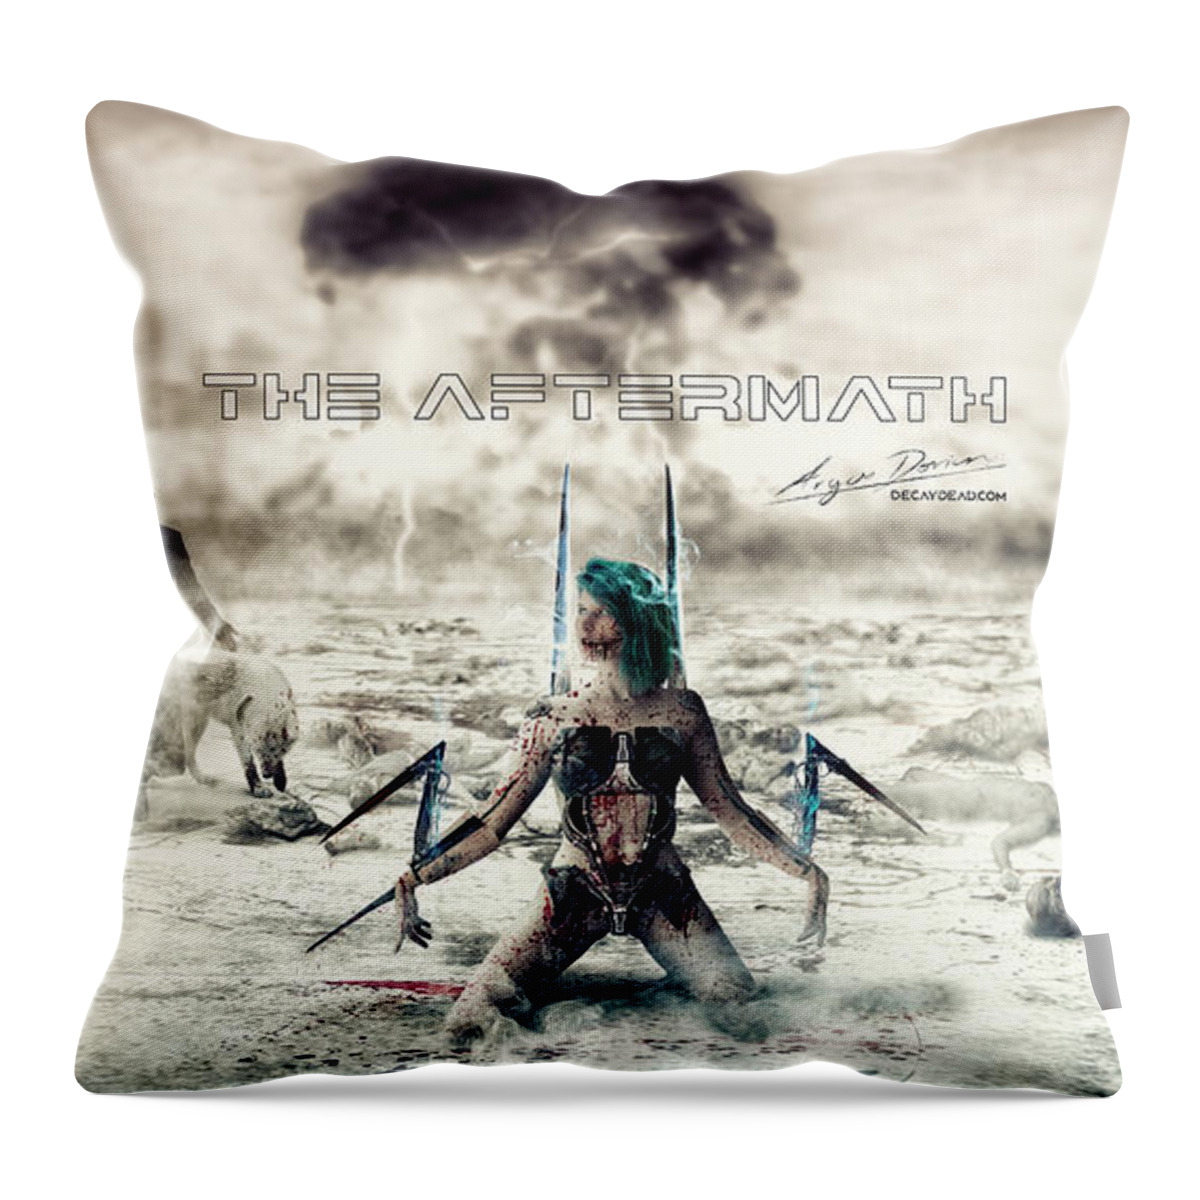 Argus Dorian Throw Pillow featuring the digital art The Aftermath The end of her war by Argus Dorian